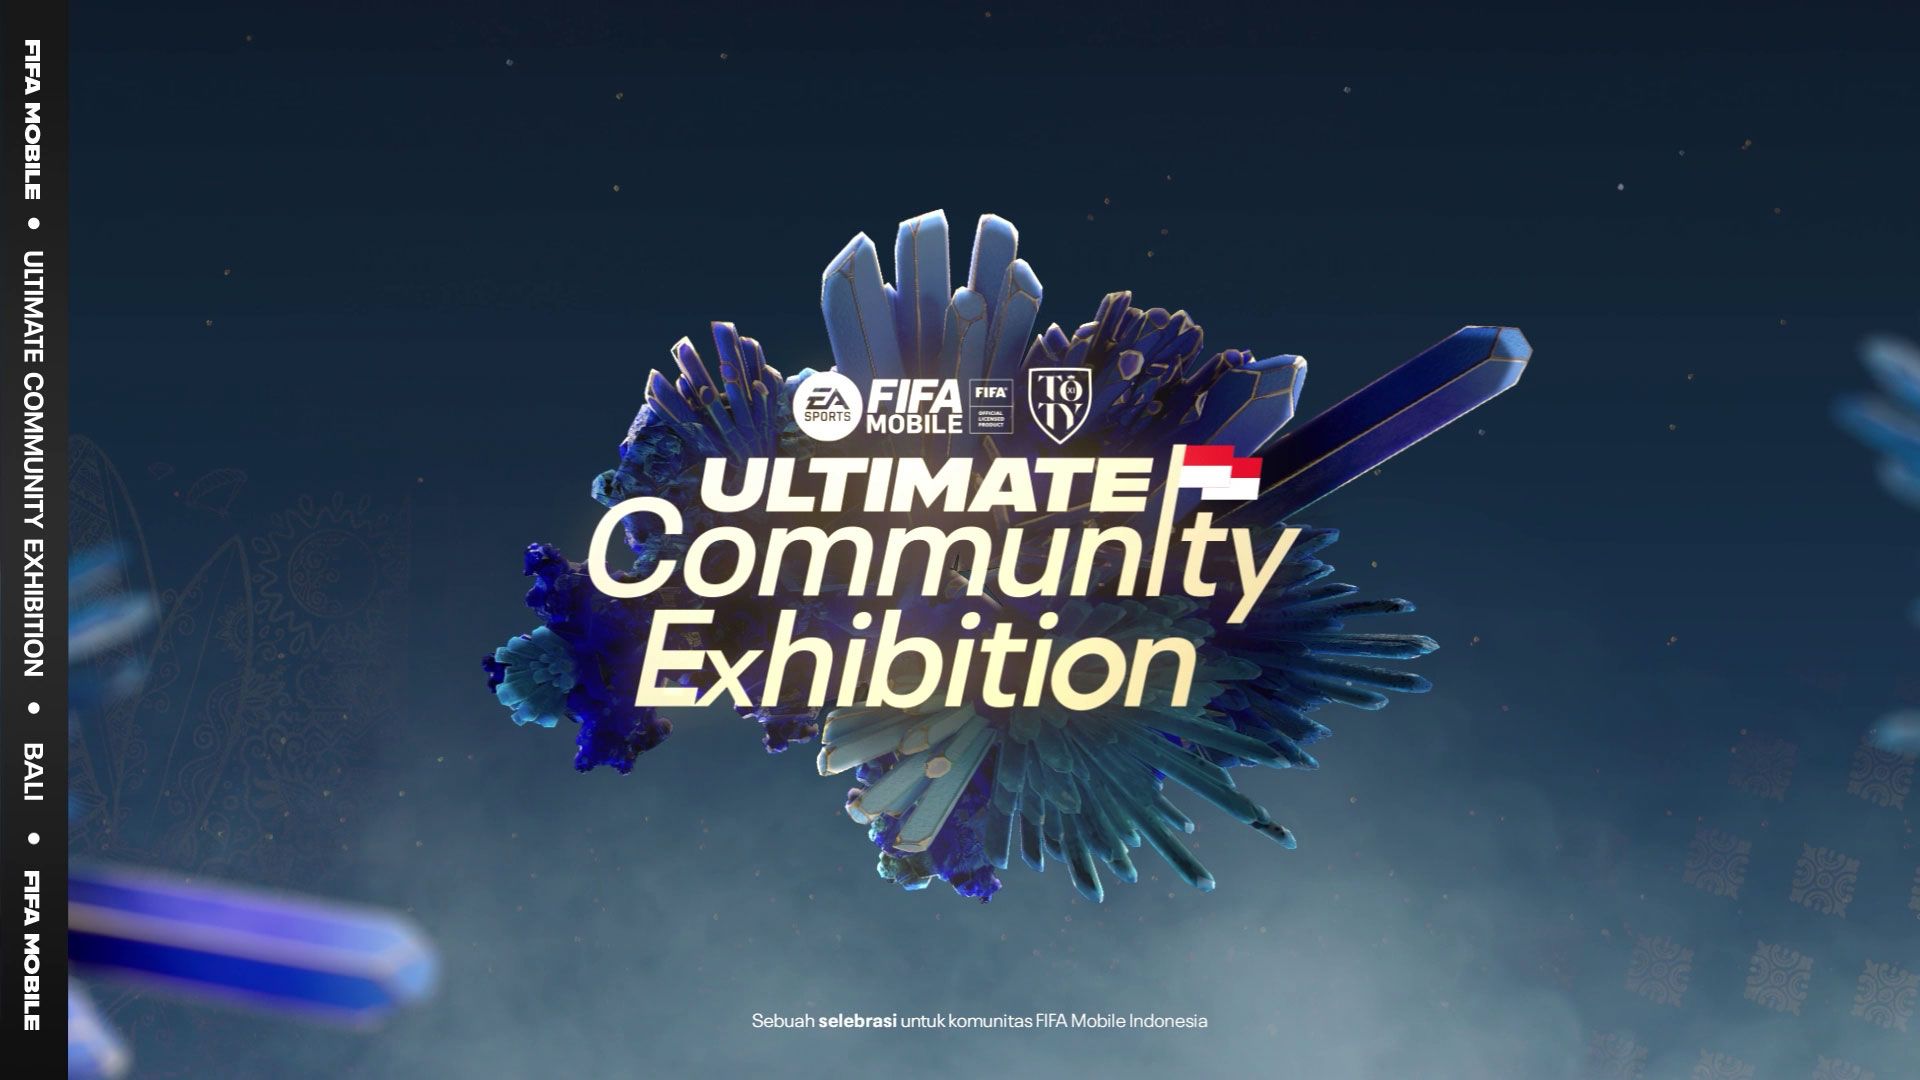 FIFA Mobile Ultimate Community Exhibition.jpg